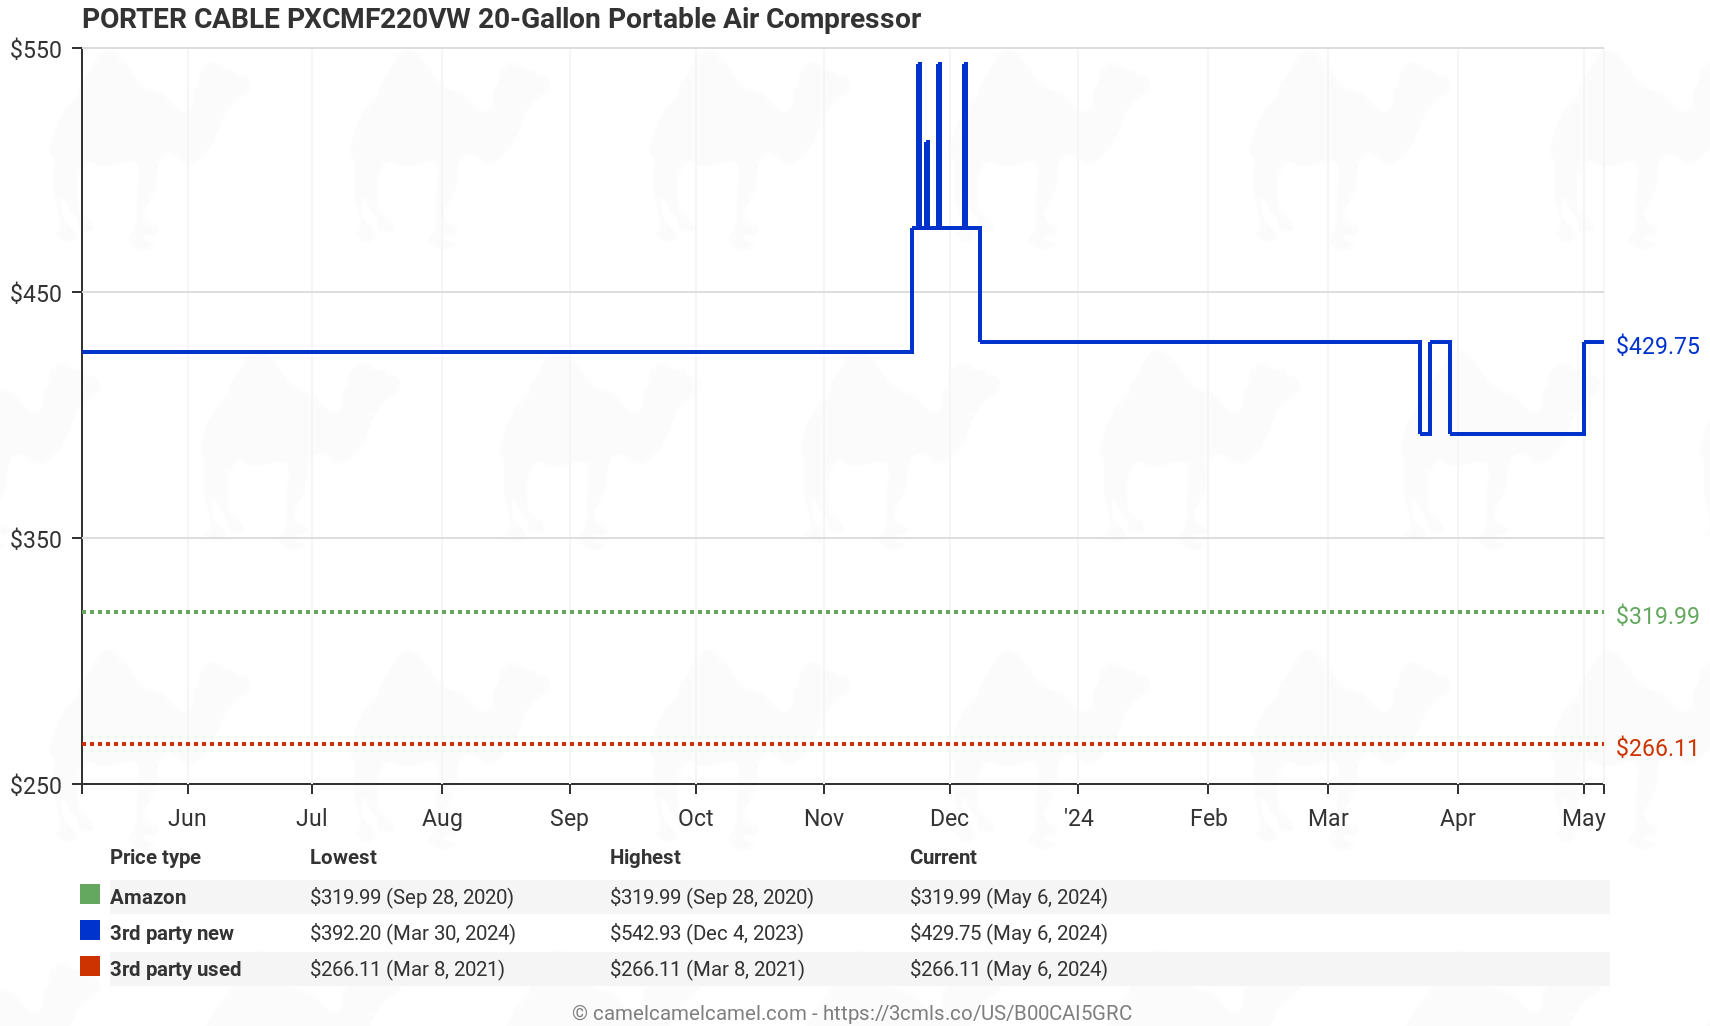 PORTER CABLE PXCMF220VW 20-Gallon Portable Air Compressor - Price History: B00CAI5GRC